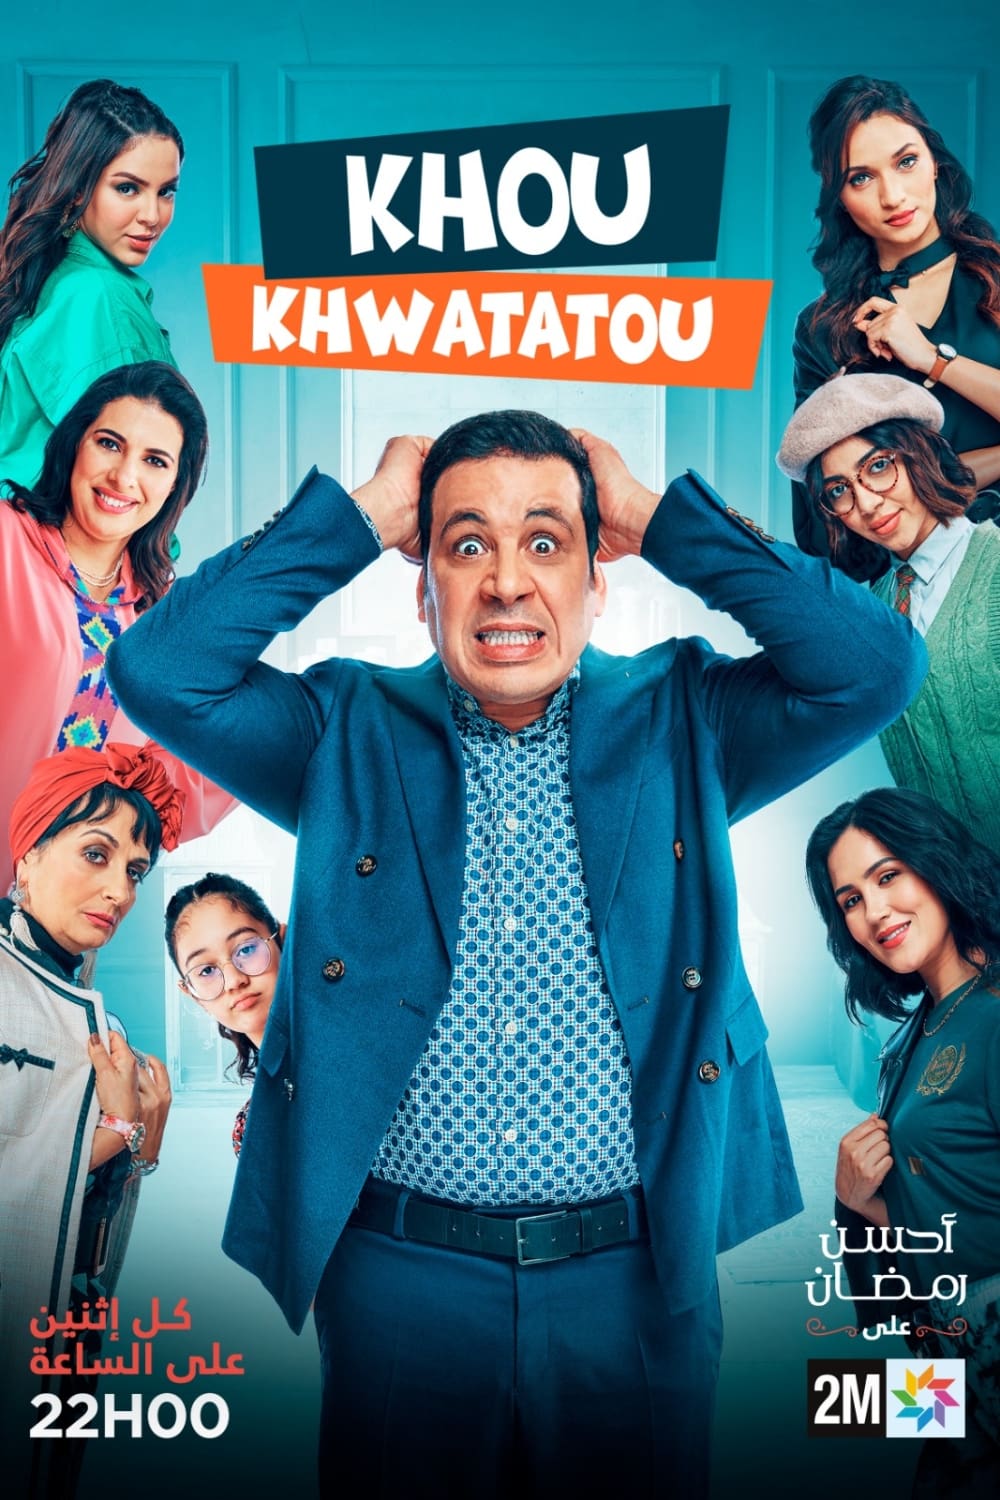 TV ratings for Khou Khwatatou (خو خواتاتو) in Colombia. 2M TV series